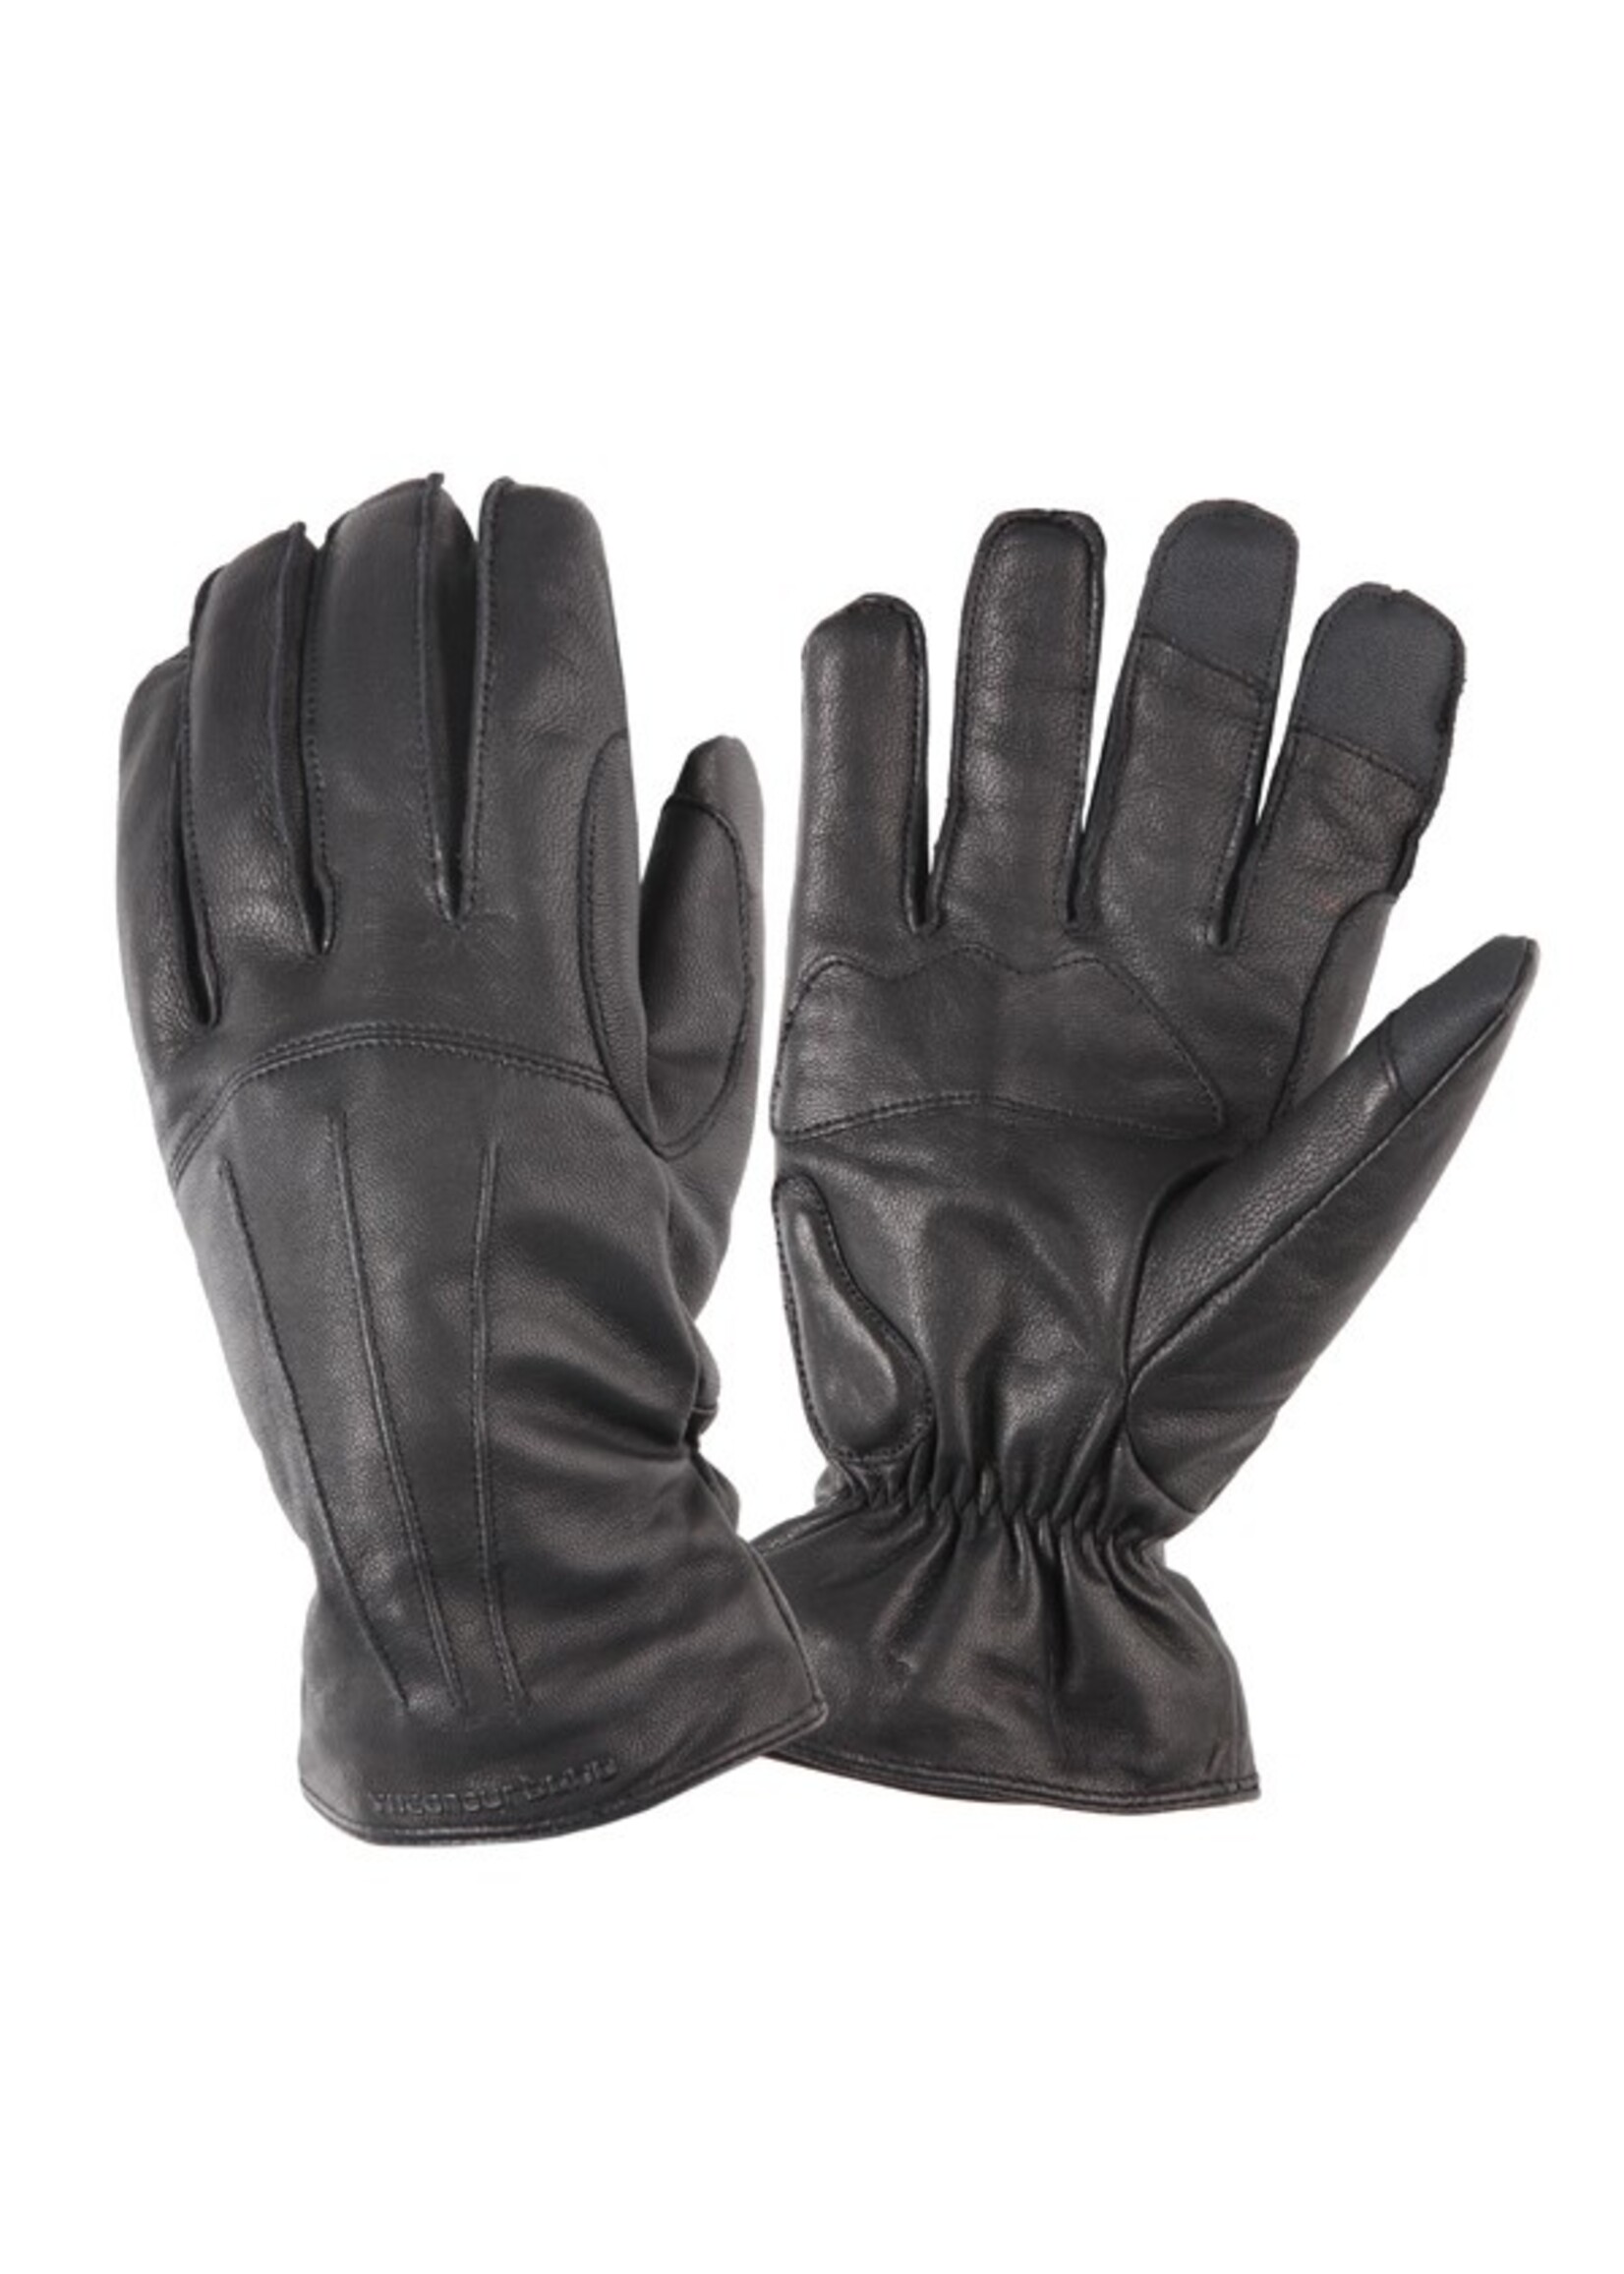 kleding handschoenset leer XL zwart tucano softy icon 951mn